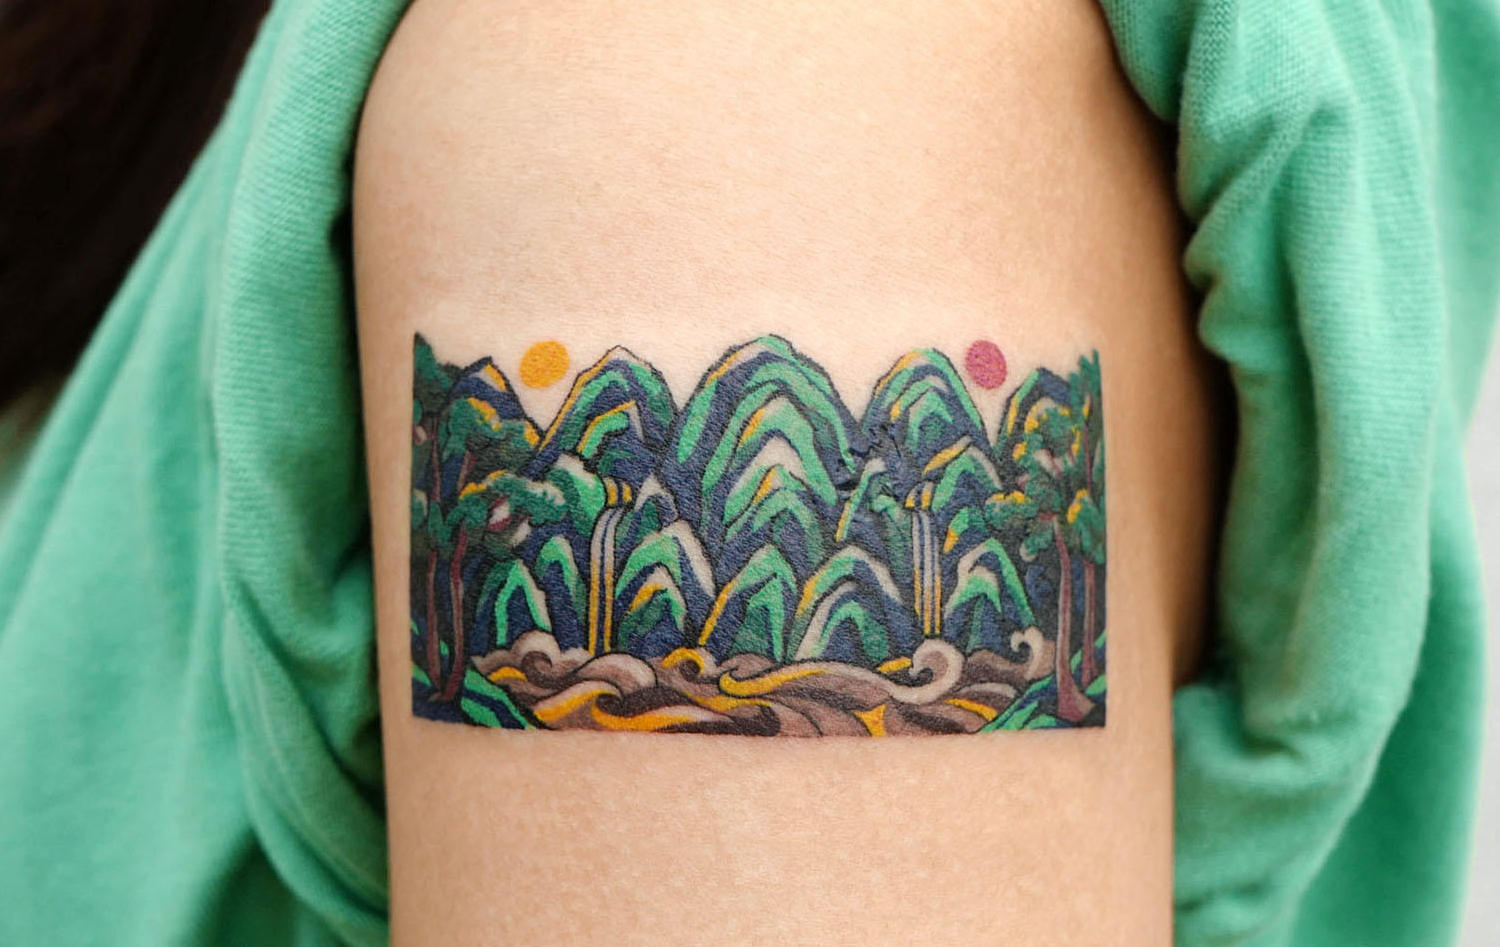 Stylized landscape tattoo by Eden, from south korea